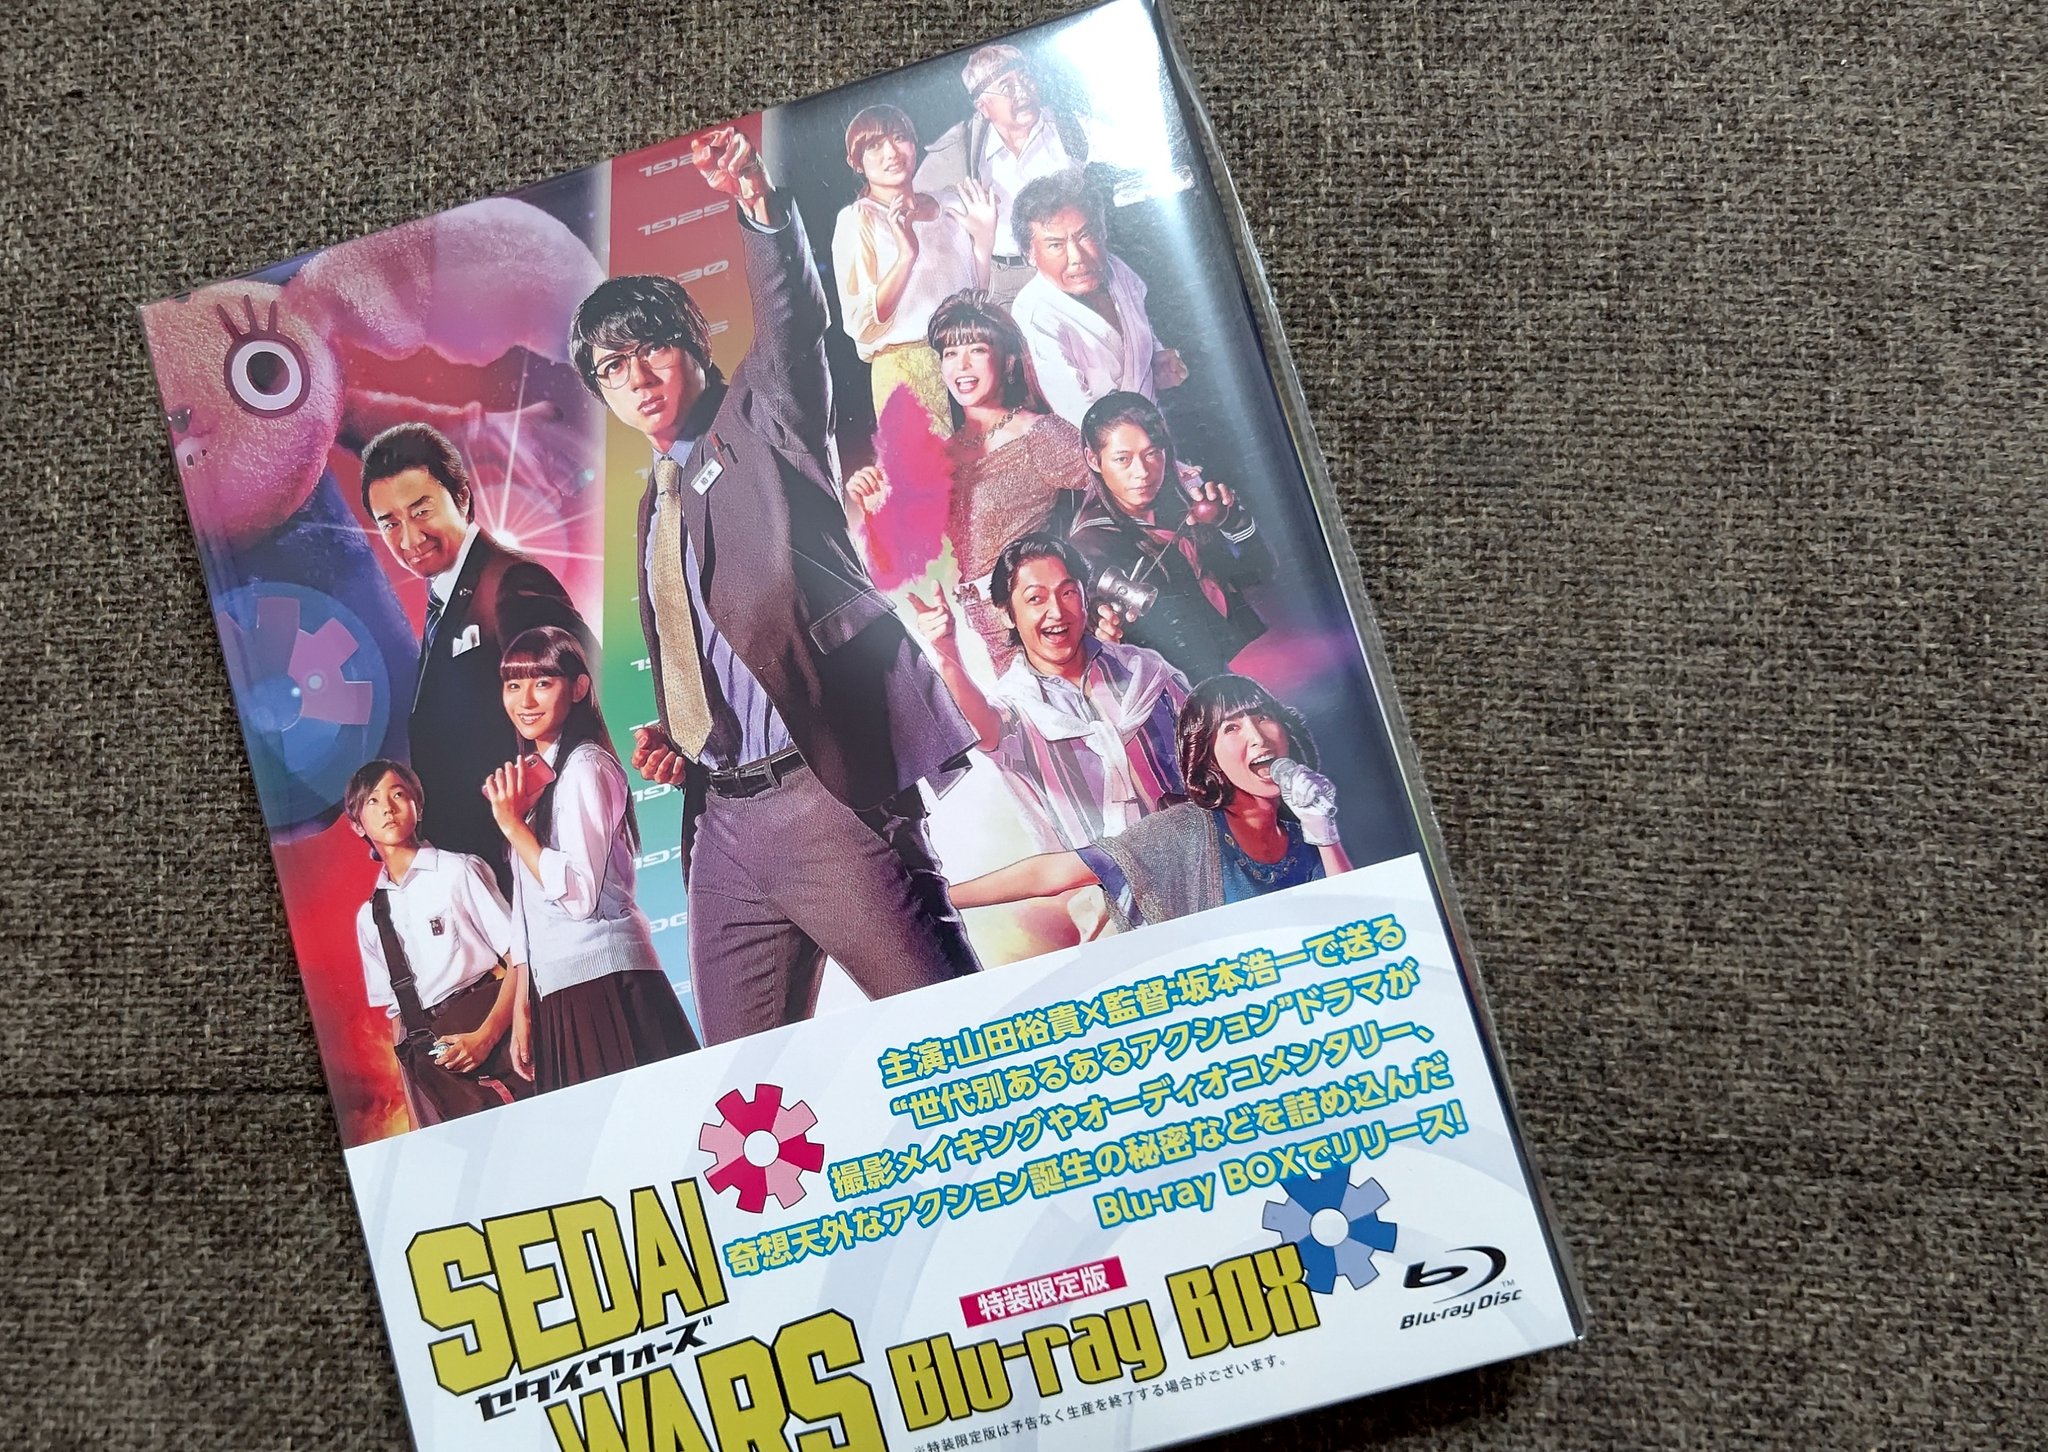 SEDAI WARS Blu-ray BOX〈特装限定版・3枚組〉